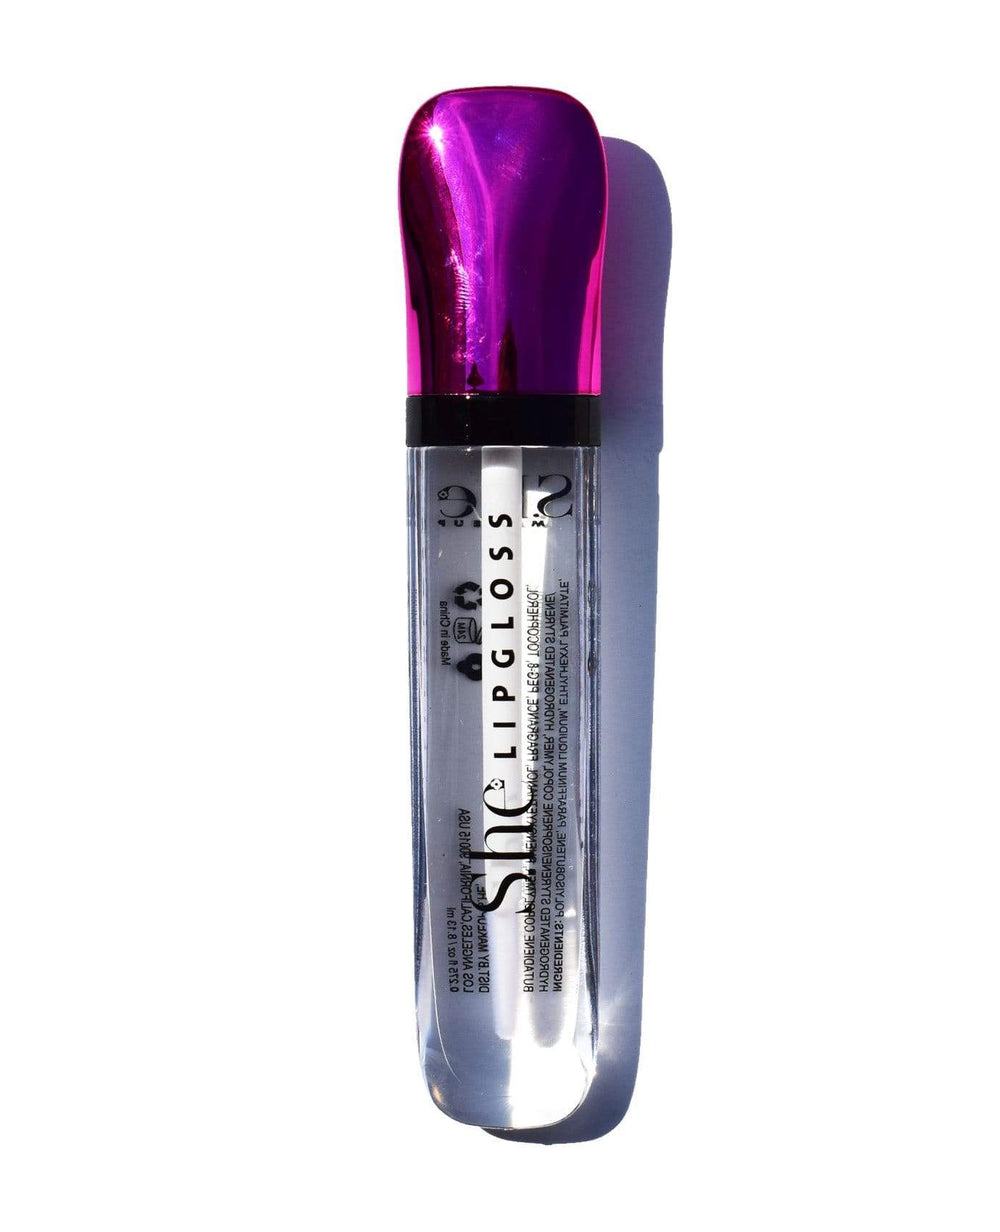 $1 Ultra glossy sheen liquid lip gloss